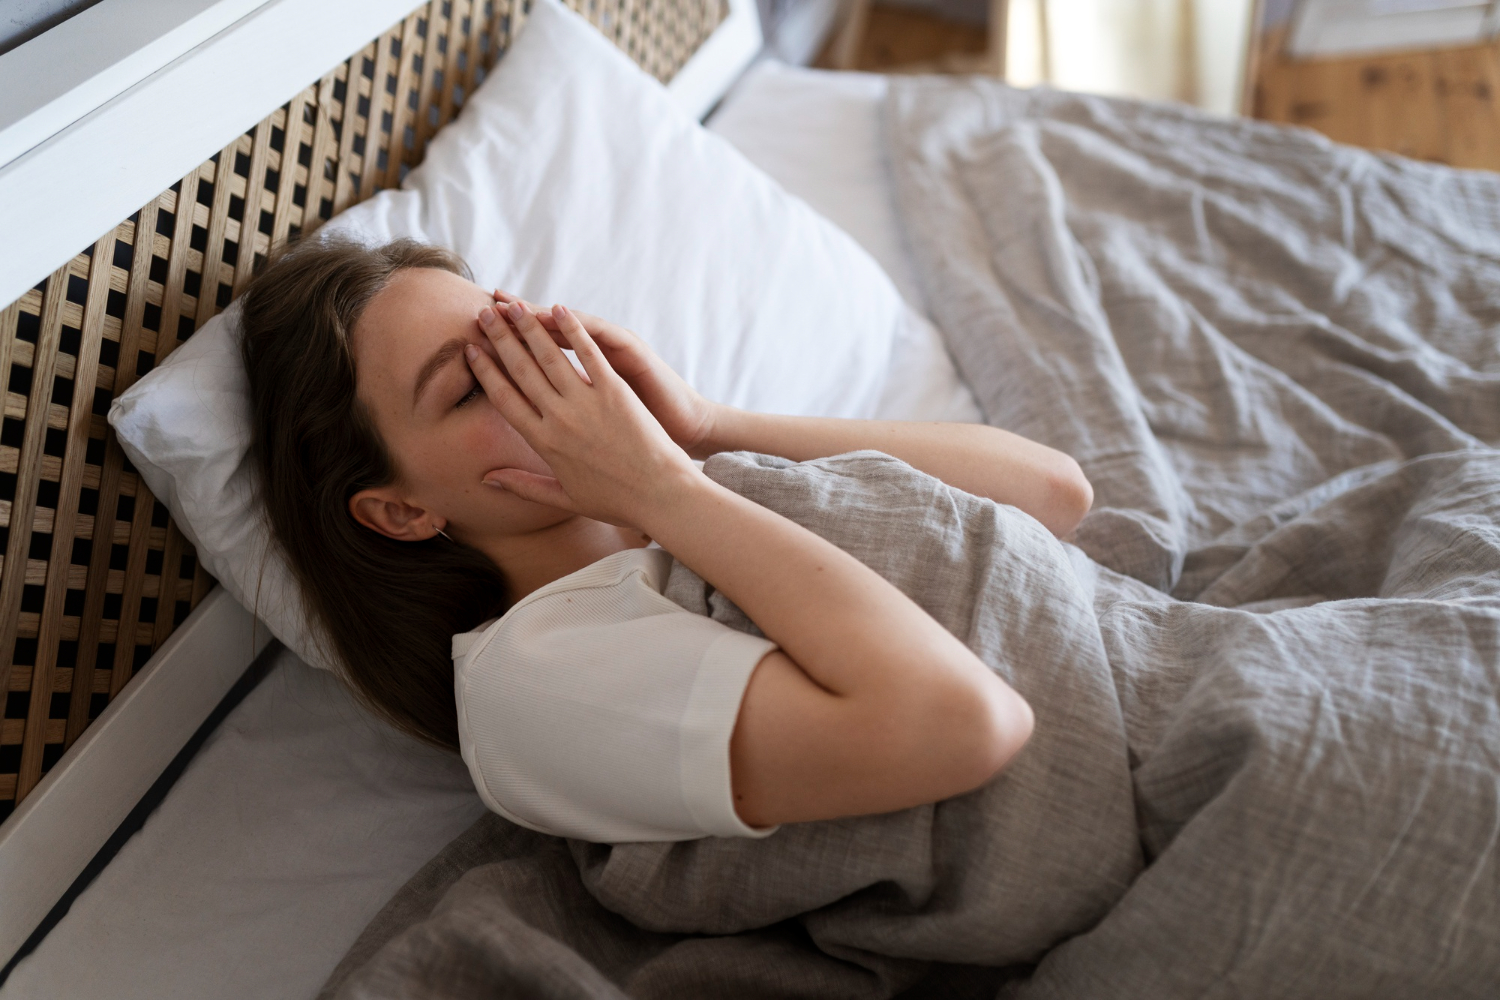 warning signs of sleep apnea, What Are the Warning Signs of Sleep Apnea, Signs of Sleep Apnea, obstructive sleep apnea